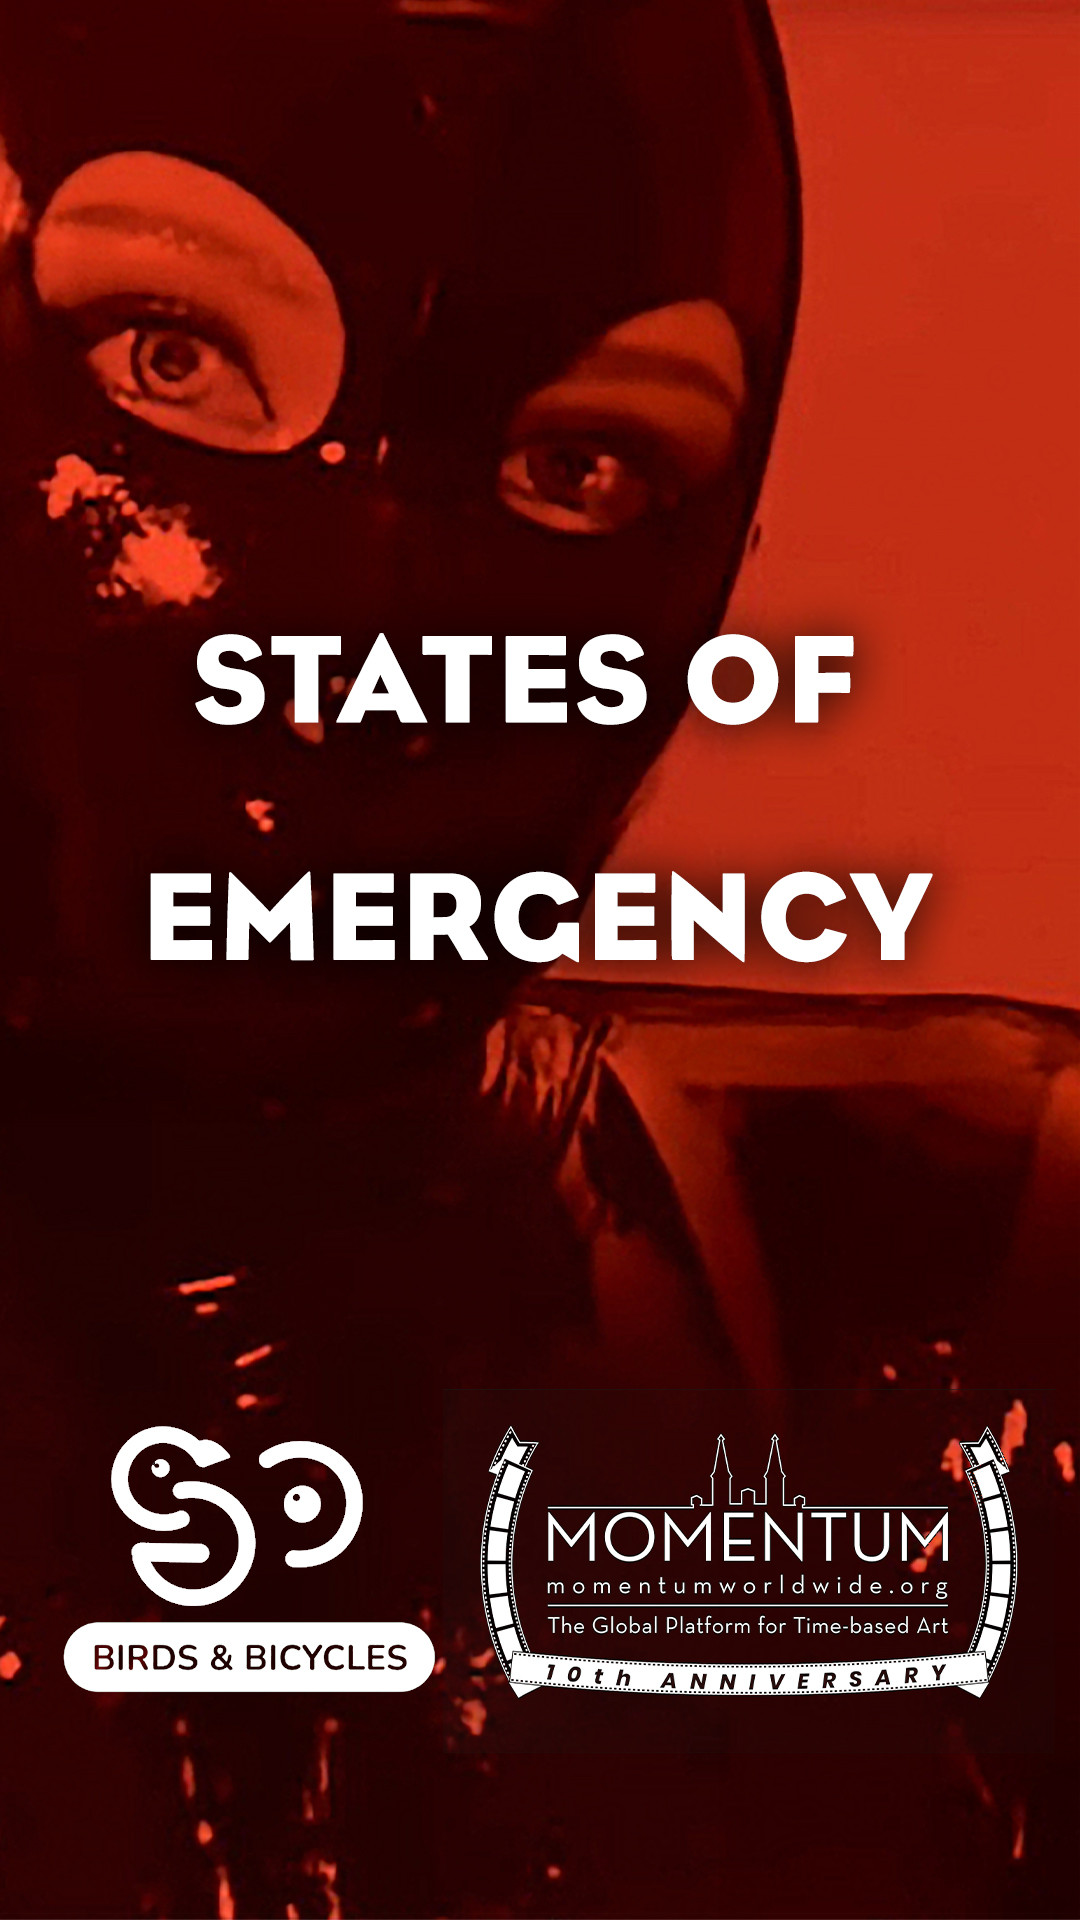 STATES OF EMERGENCY